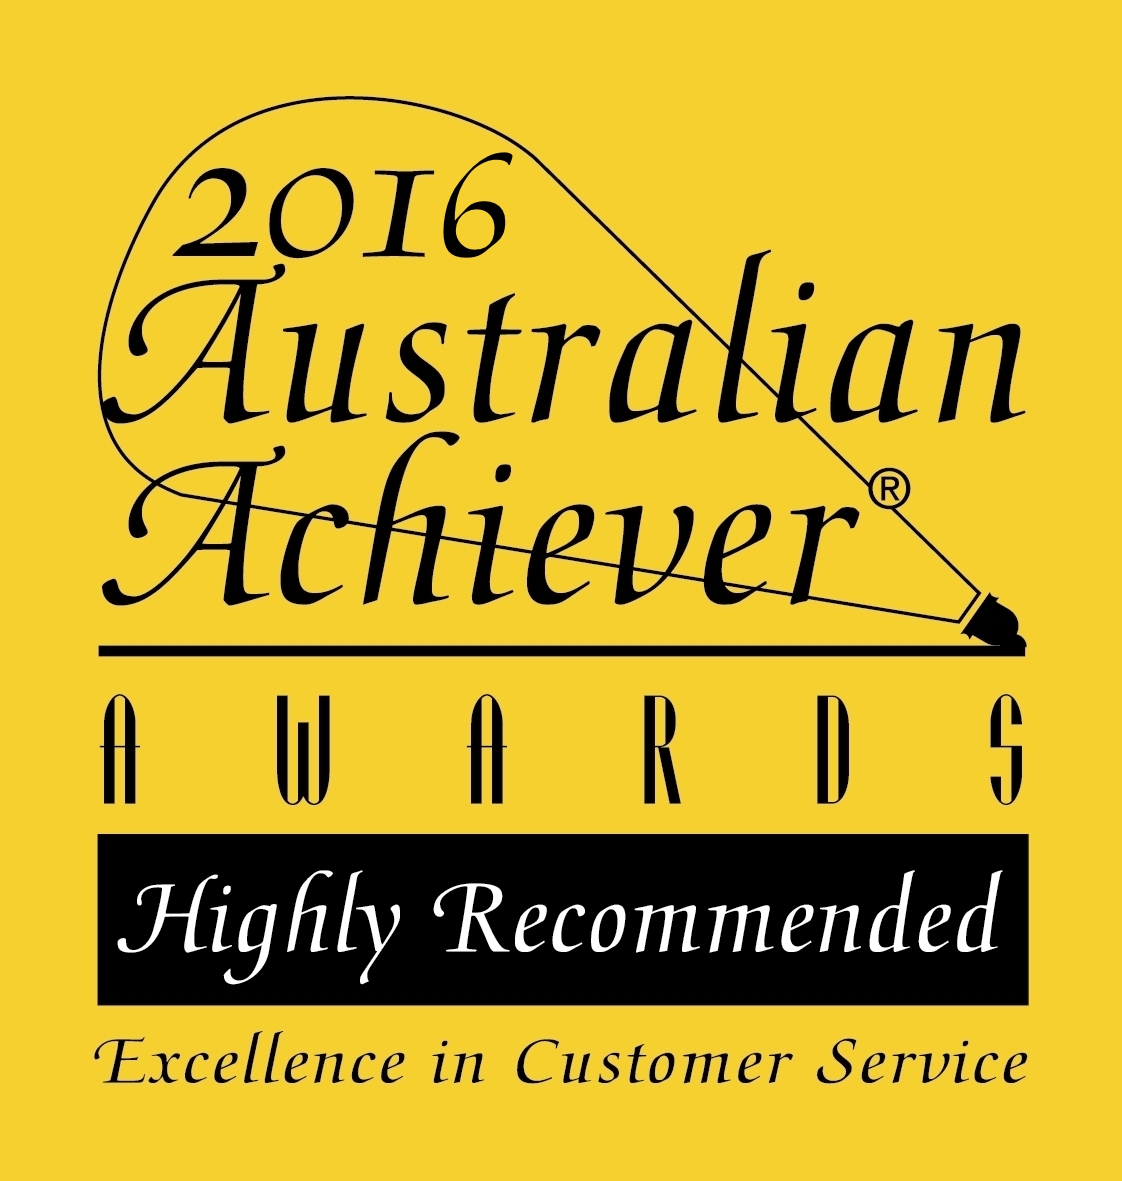 Silvans Australian Achiever Awards 2016